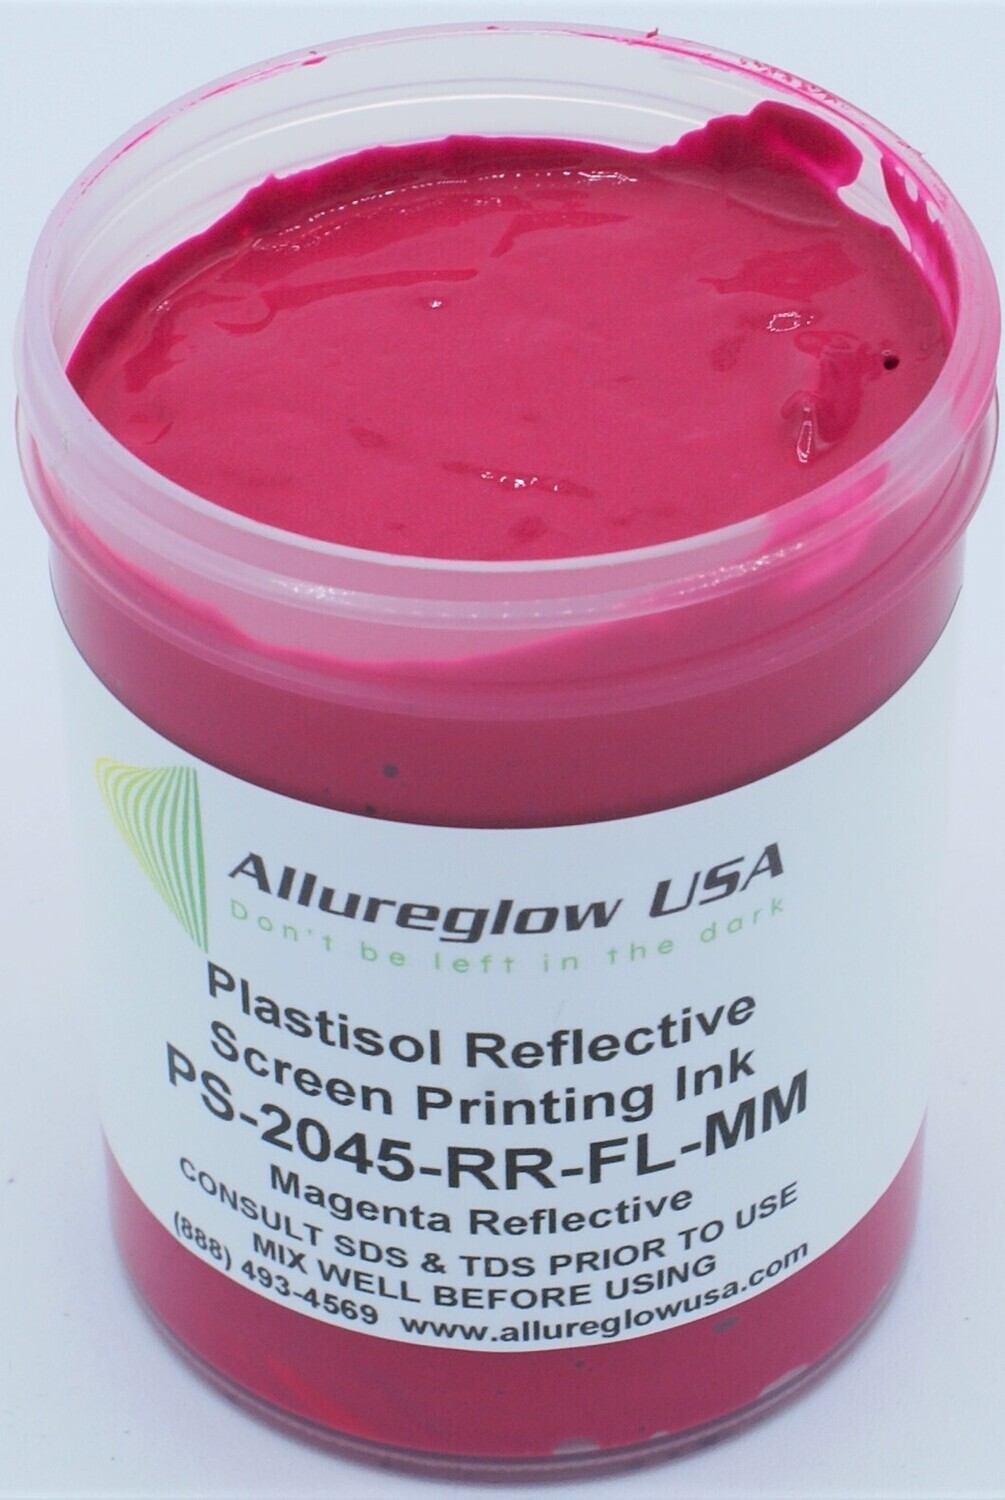 PS-2045-RR-FL-MM-8OZ  PLASTISOL FLUORESCENT MAGENTA REFLECTIVE INK - 8OZ